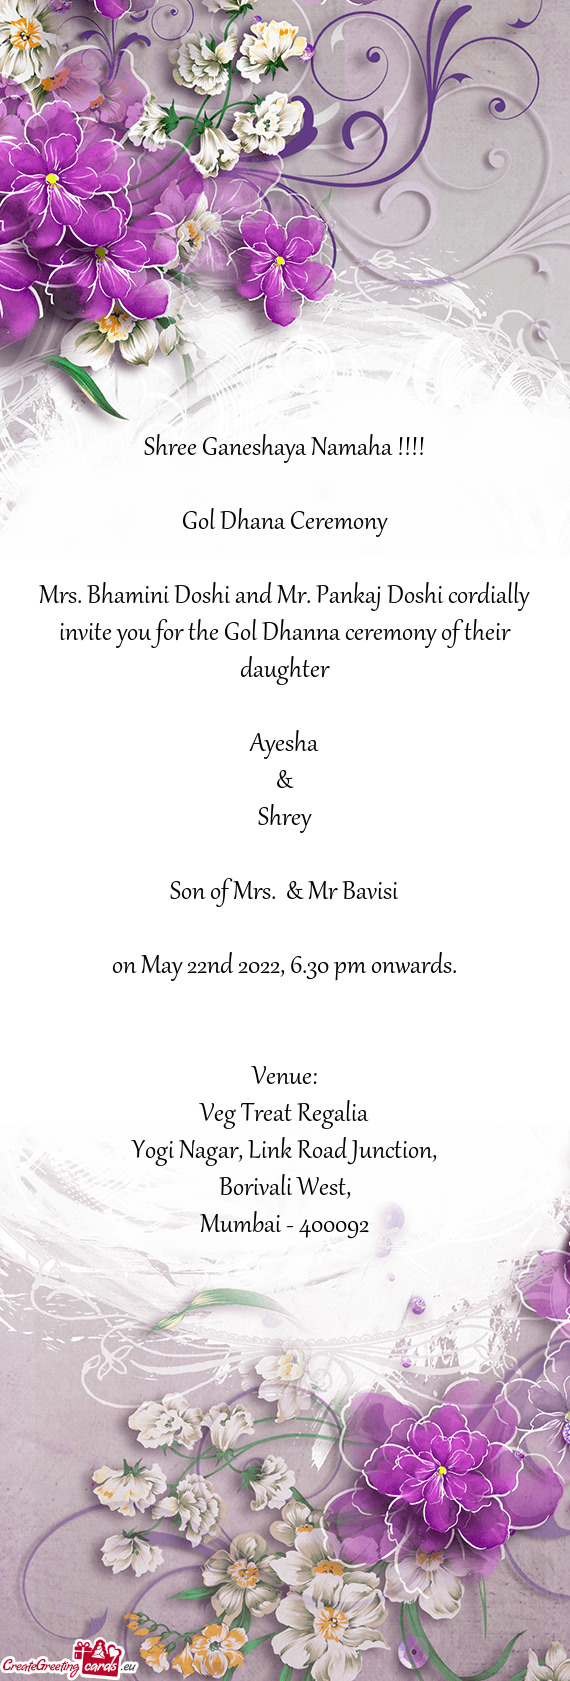 Mrs. Bhamini Doshi and Mr. Pankaj Doshi cordially invite you for the Gol Dhanna ceremony of their da